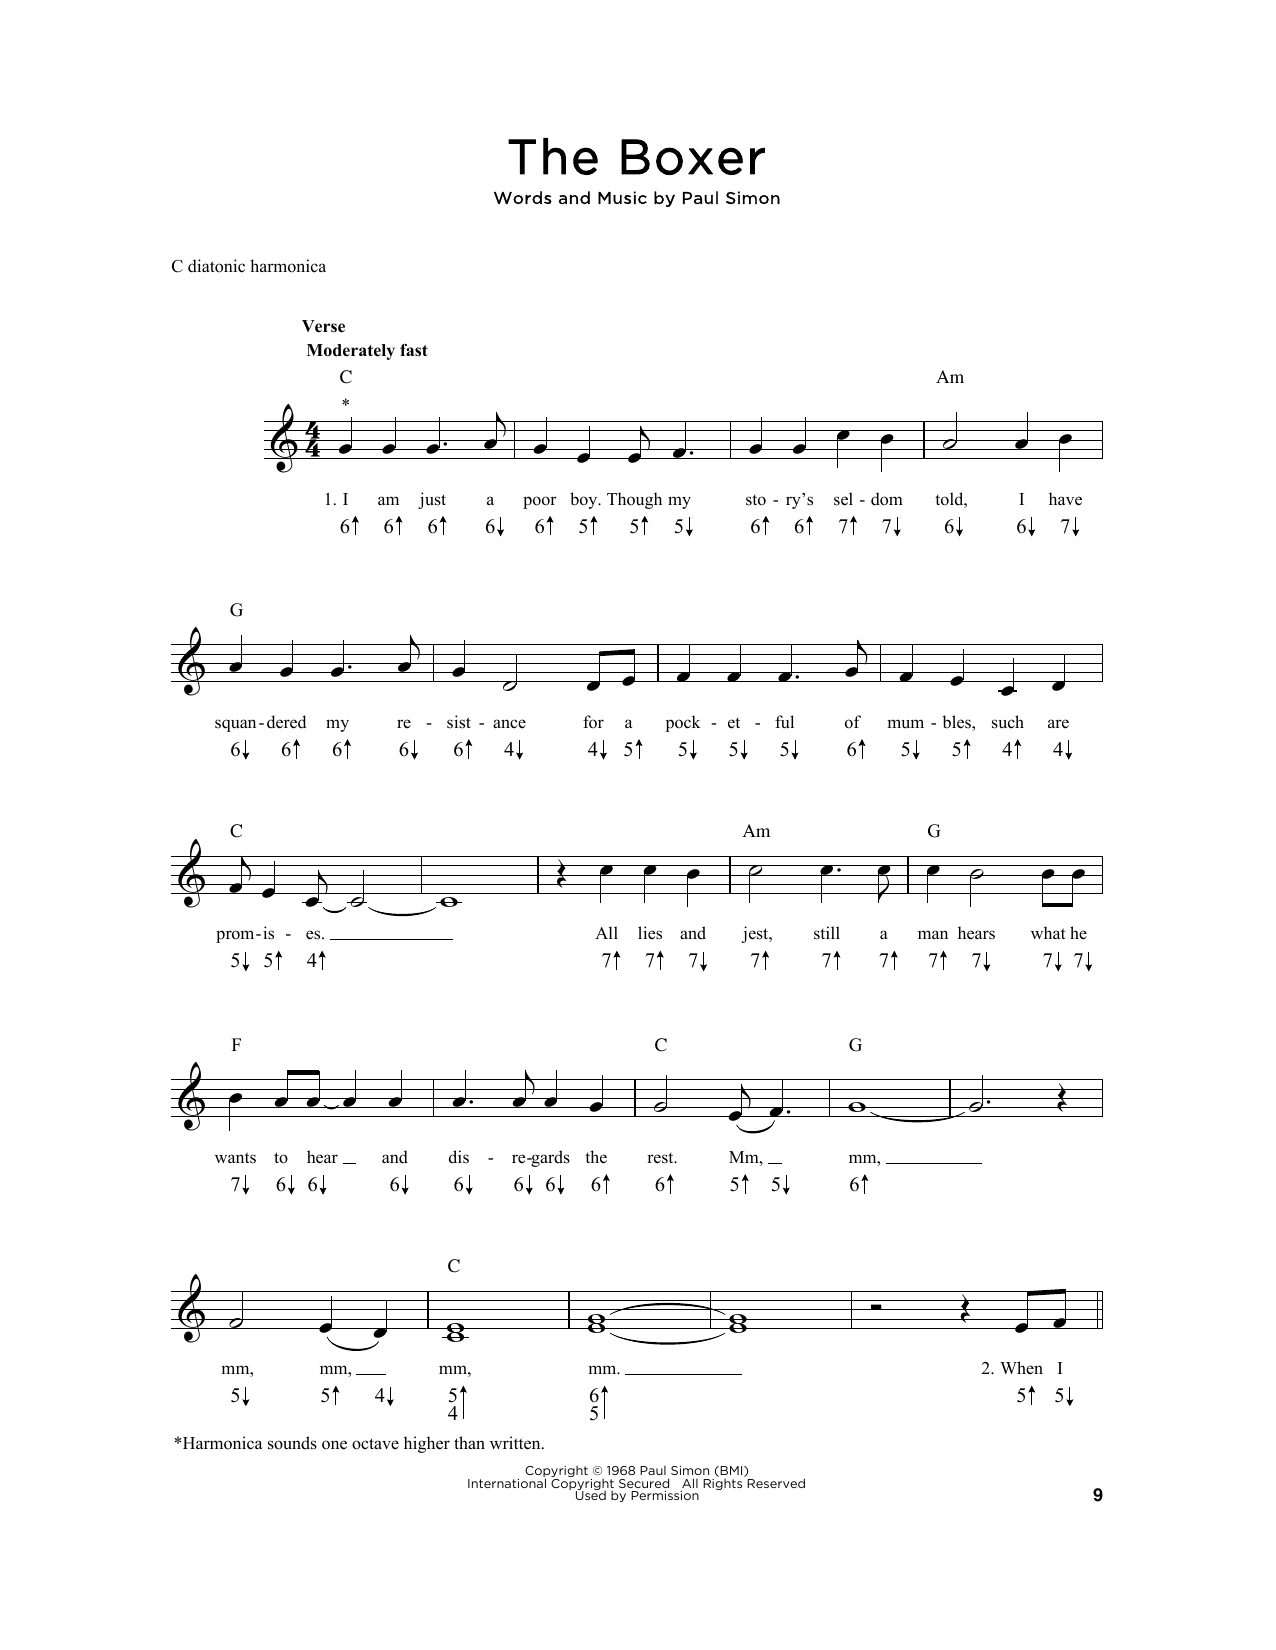 The Boxer Chords Sheet Music Digital Files To Print Licensed Paul Simon Digital